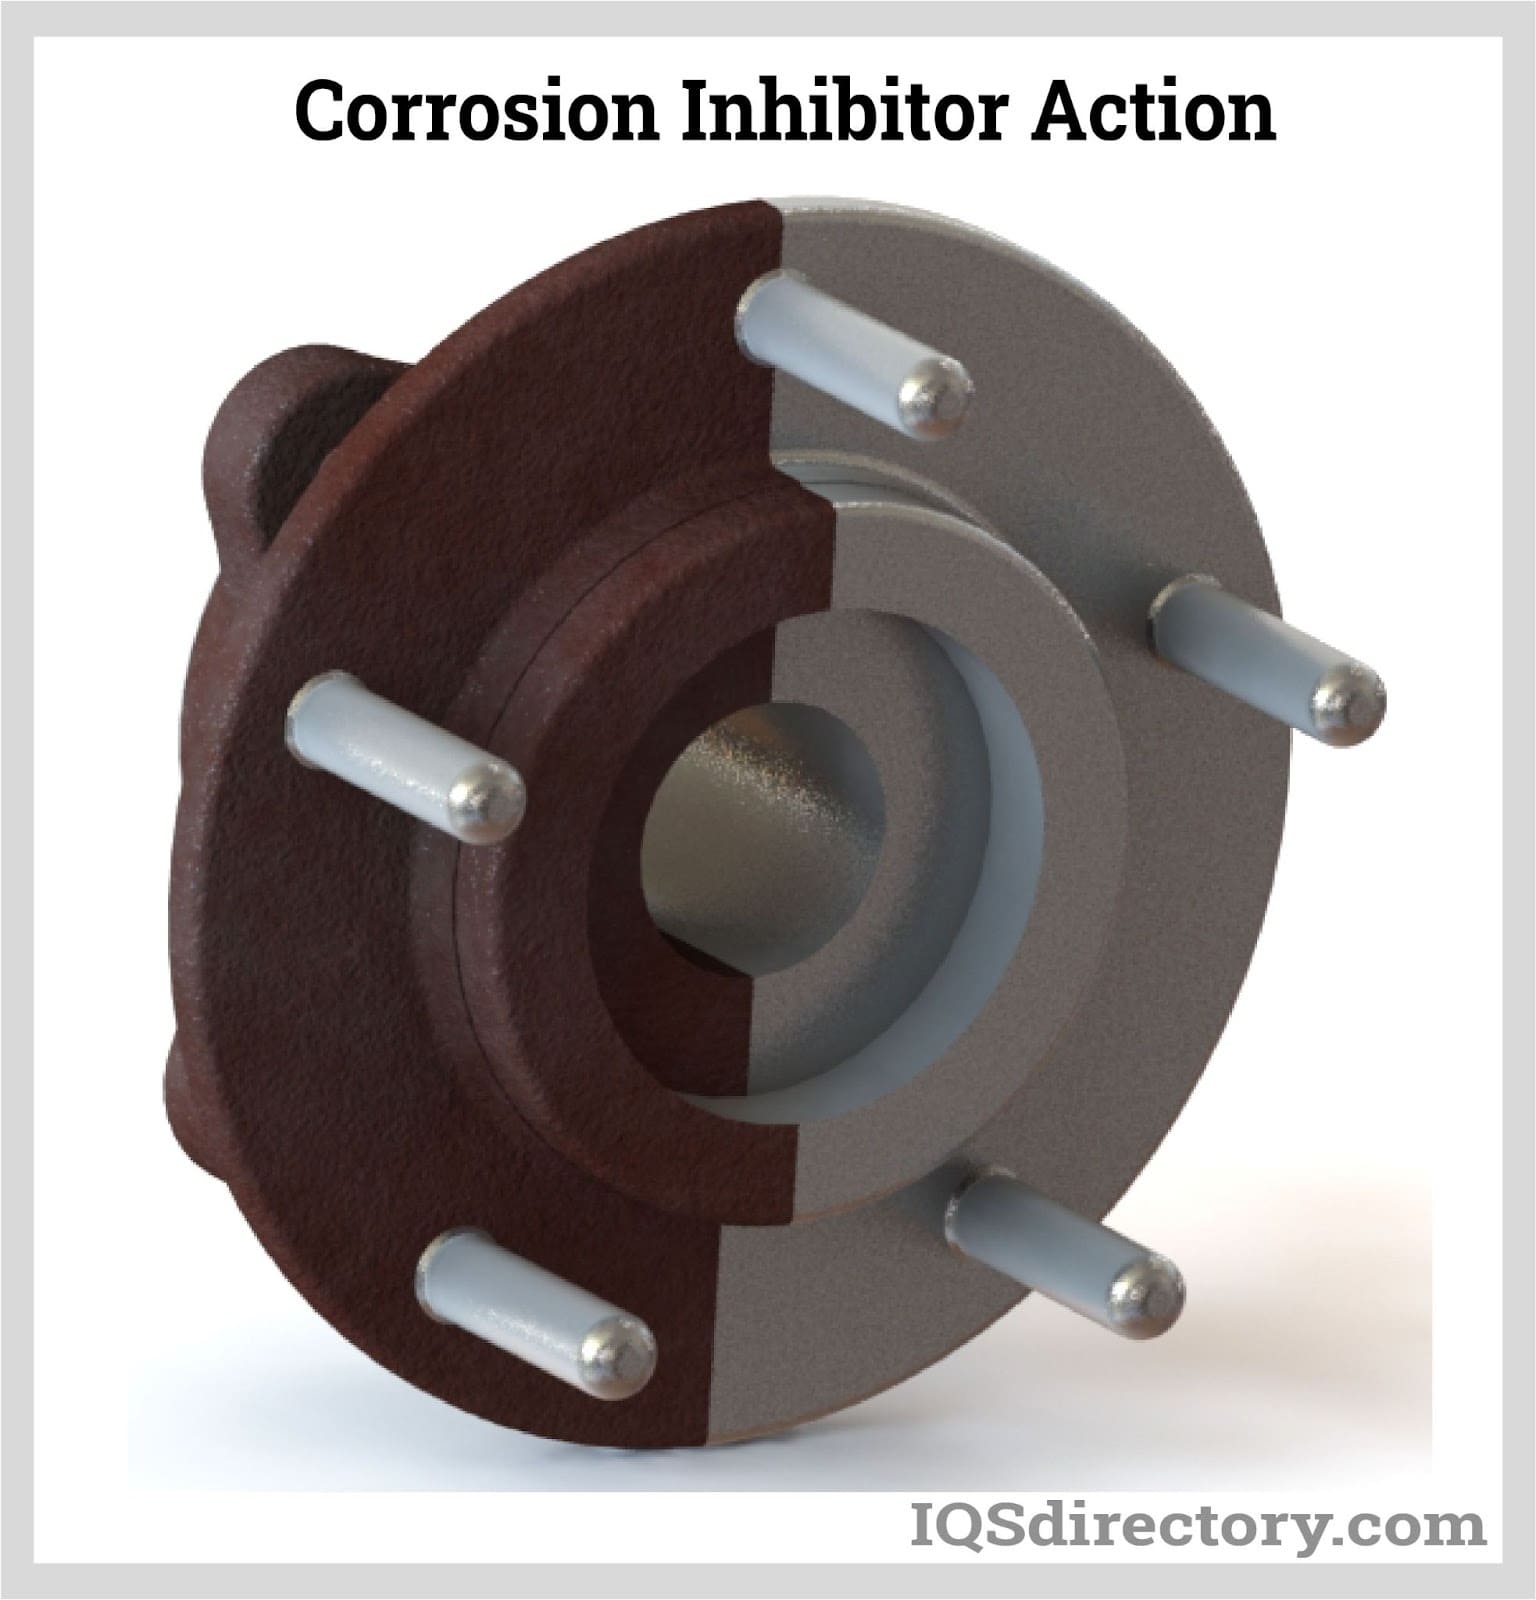 Corrosion Inhibitor Action